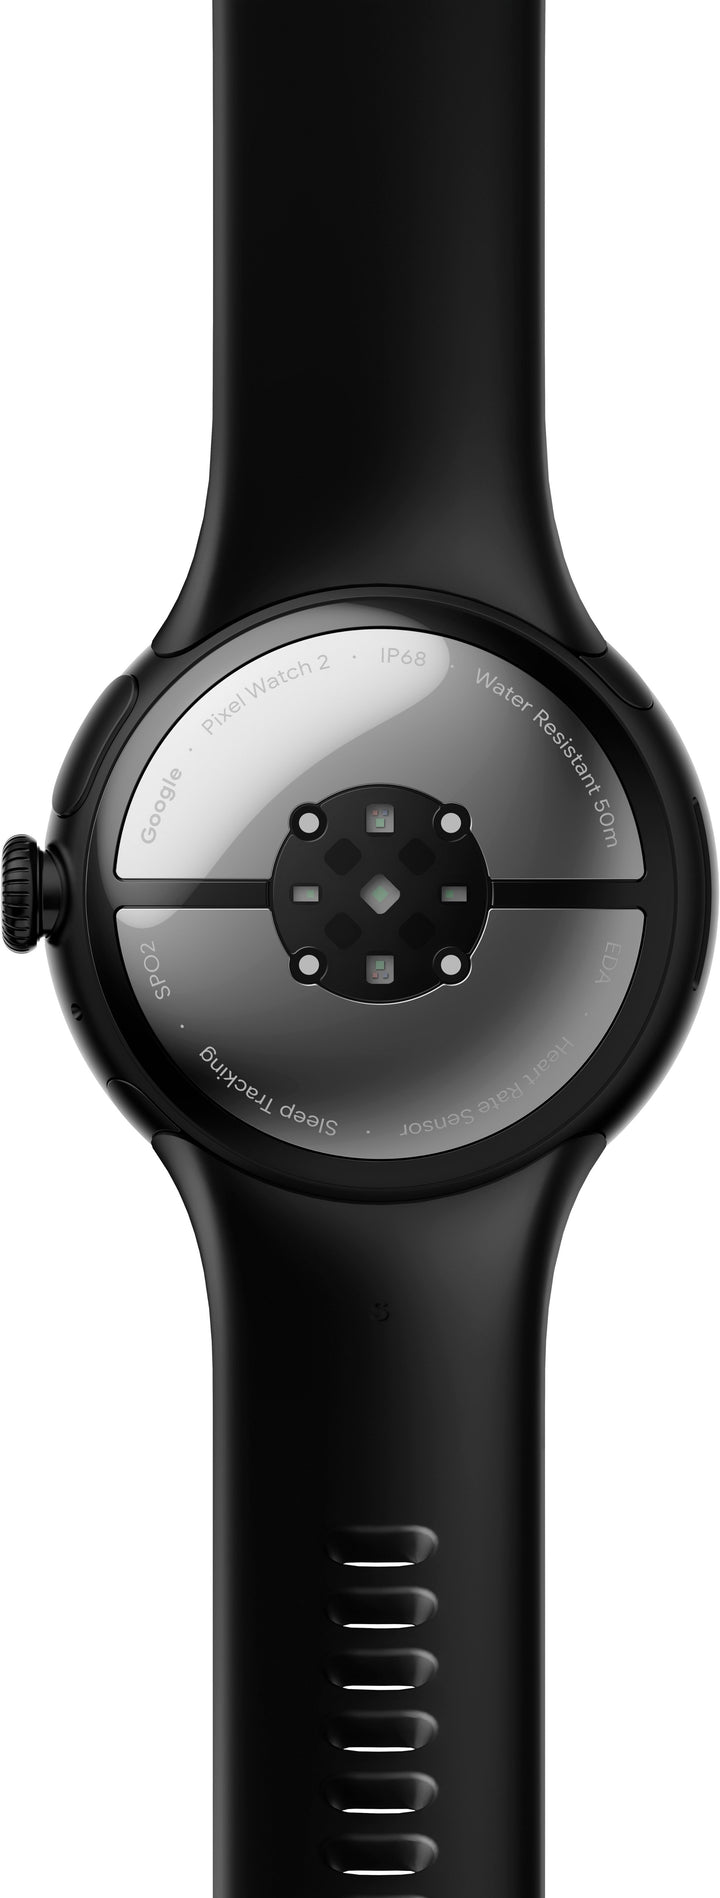 Google - Pixel Watch 2 Matte Black Smartwatch with Obsidian Active Band Wi-Fi - Matte Black_5